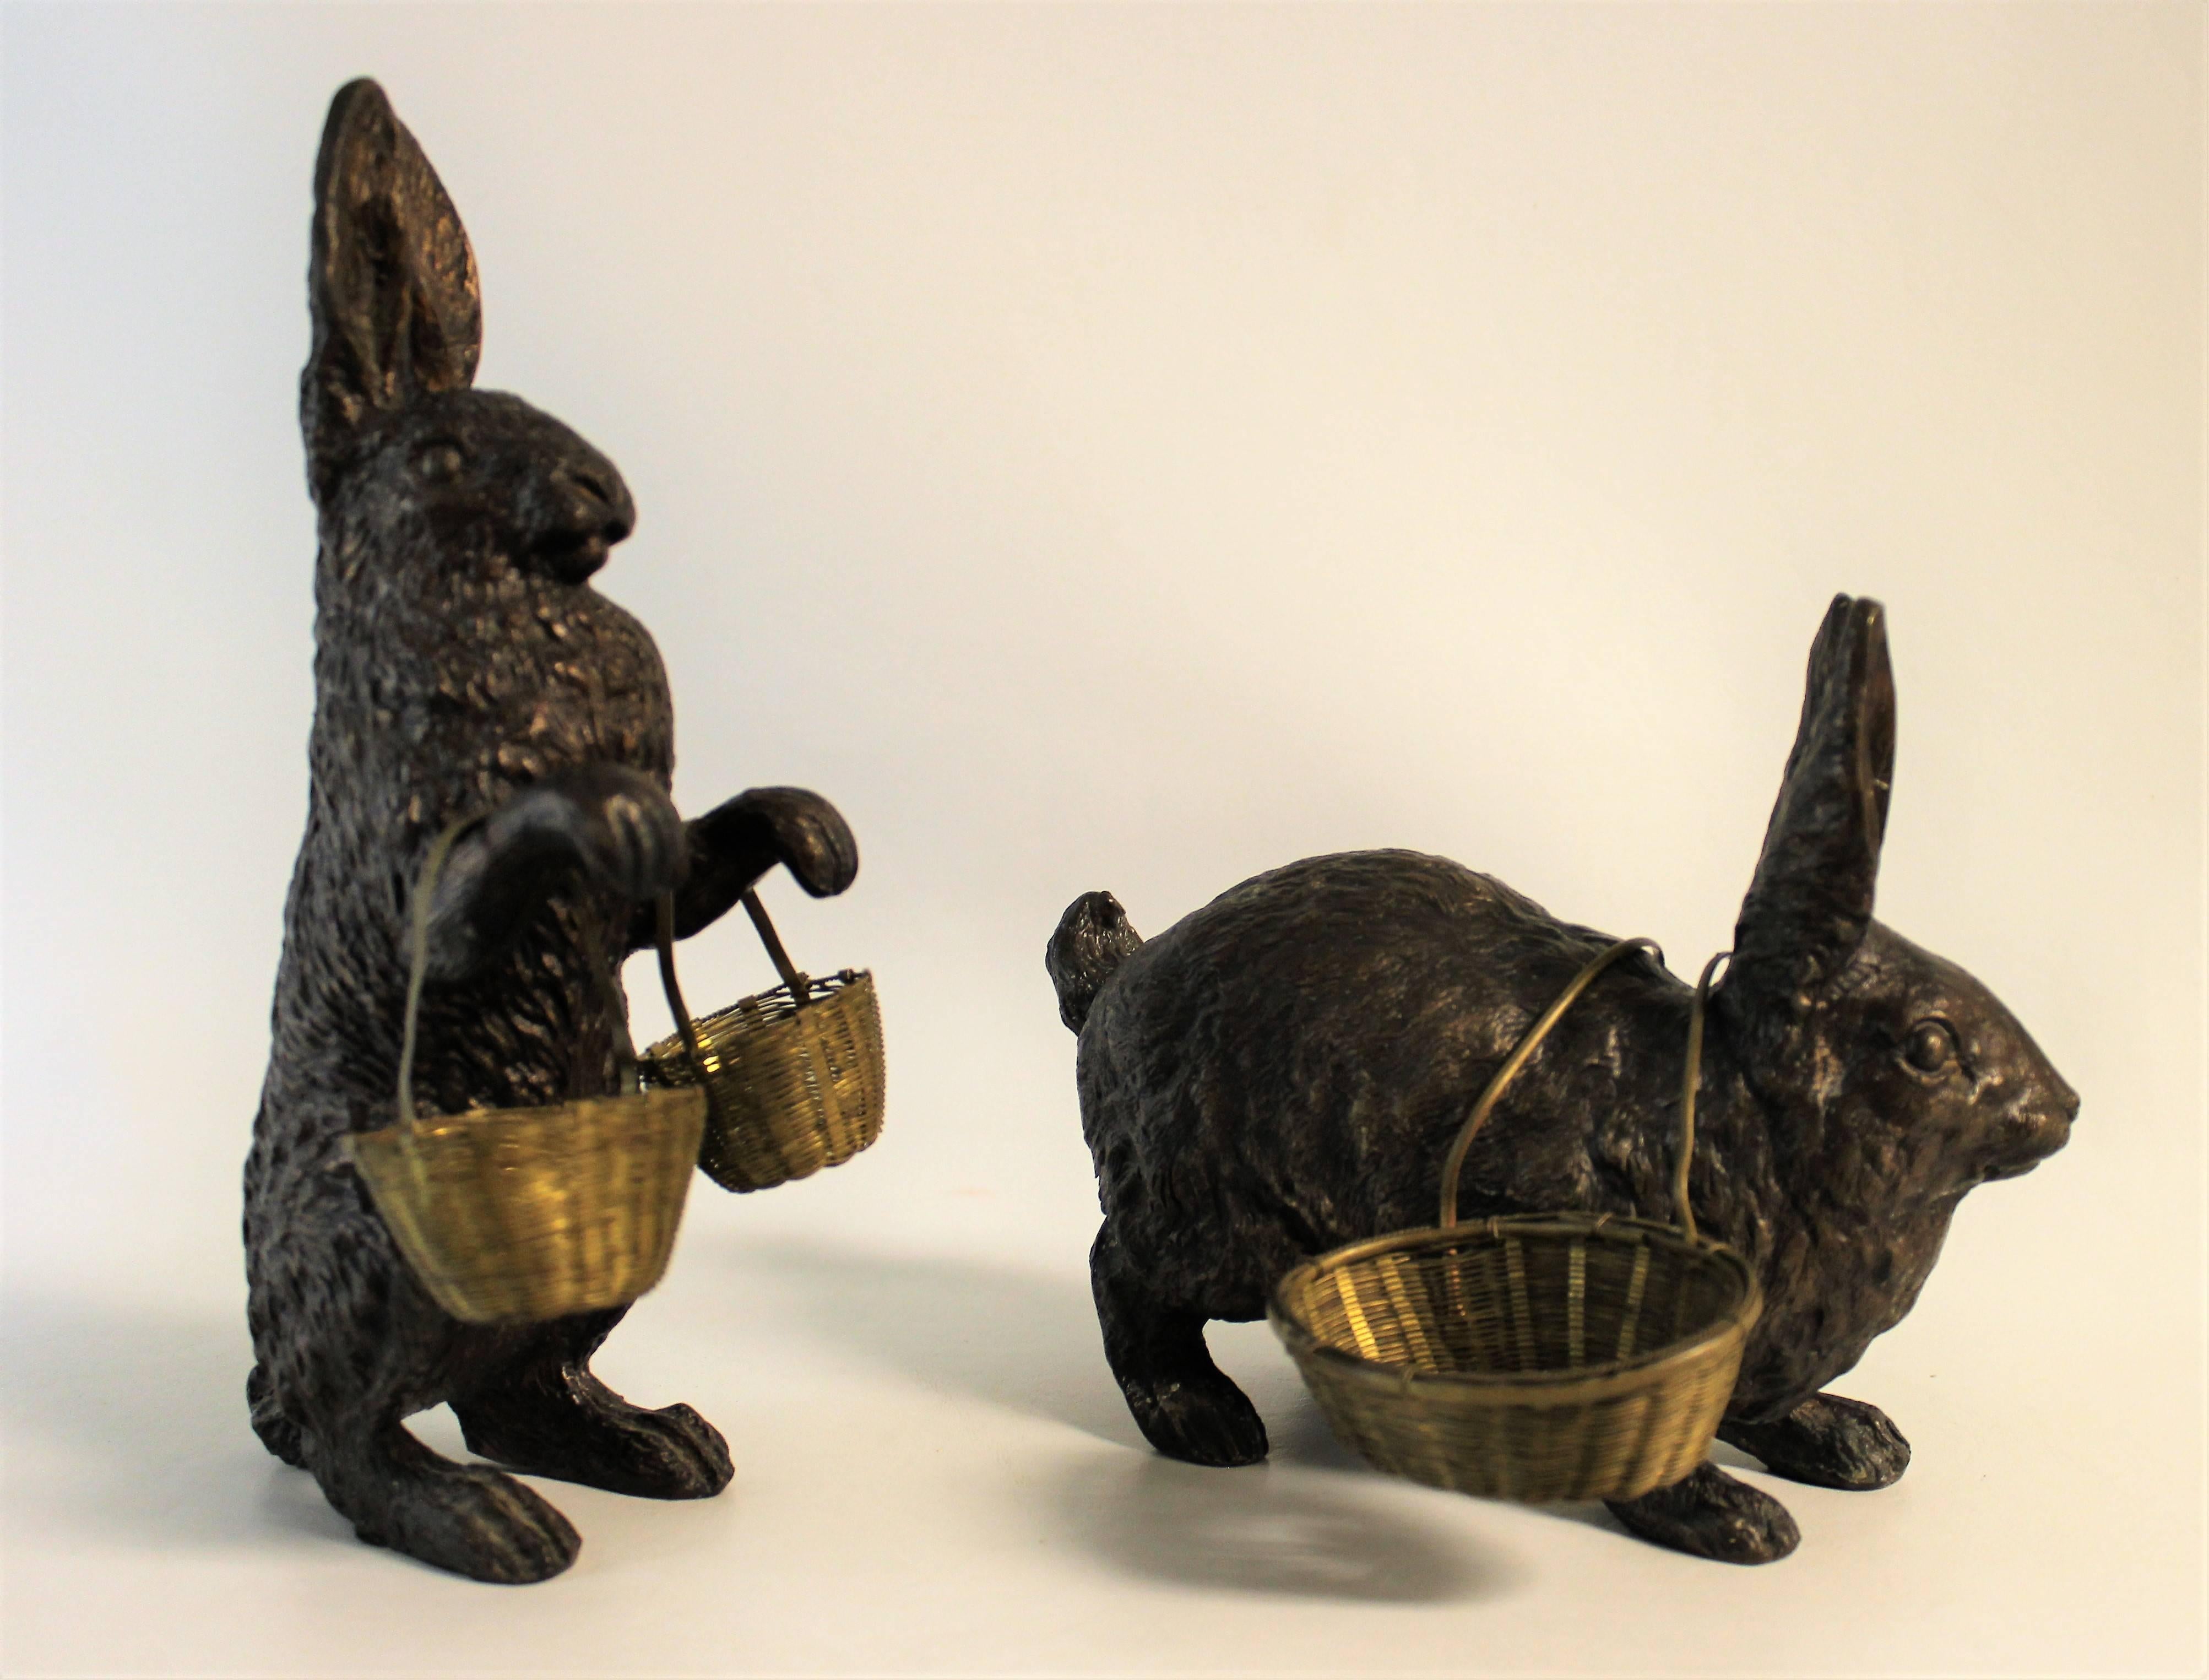 Pair of Edwardian bronze rabbit sculptures with baskets.